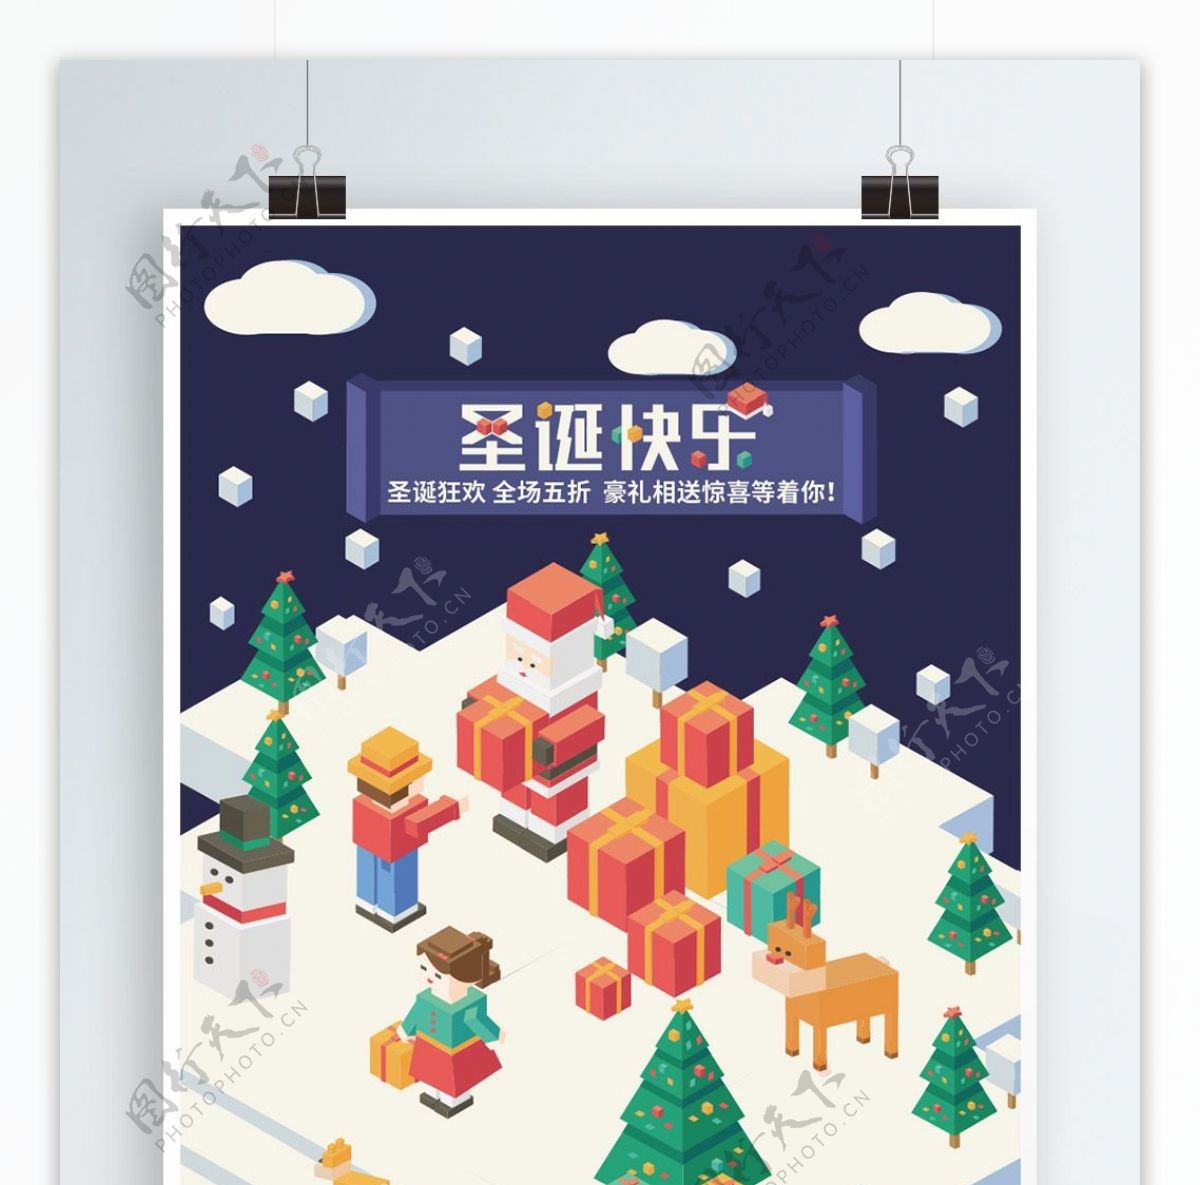 2.5D简约清新卡通原创插画圣诞节海报